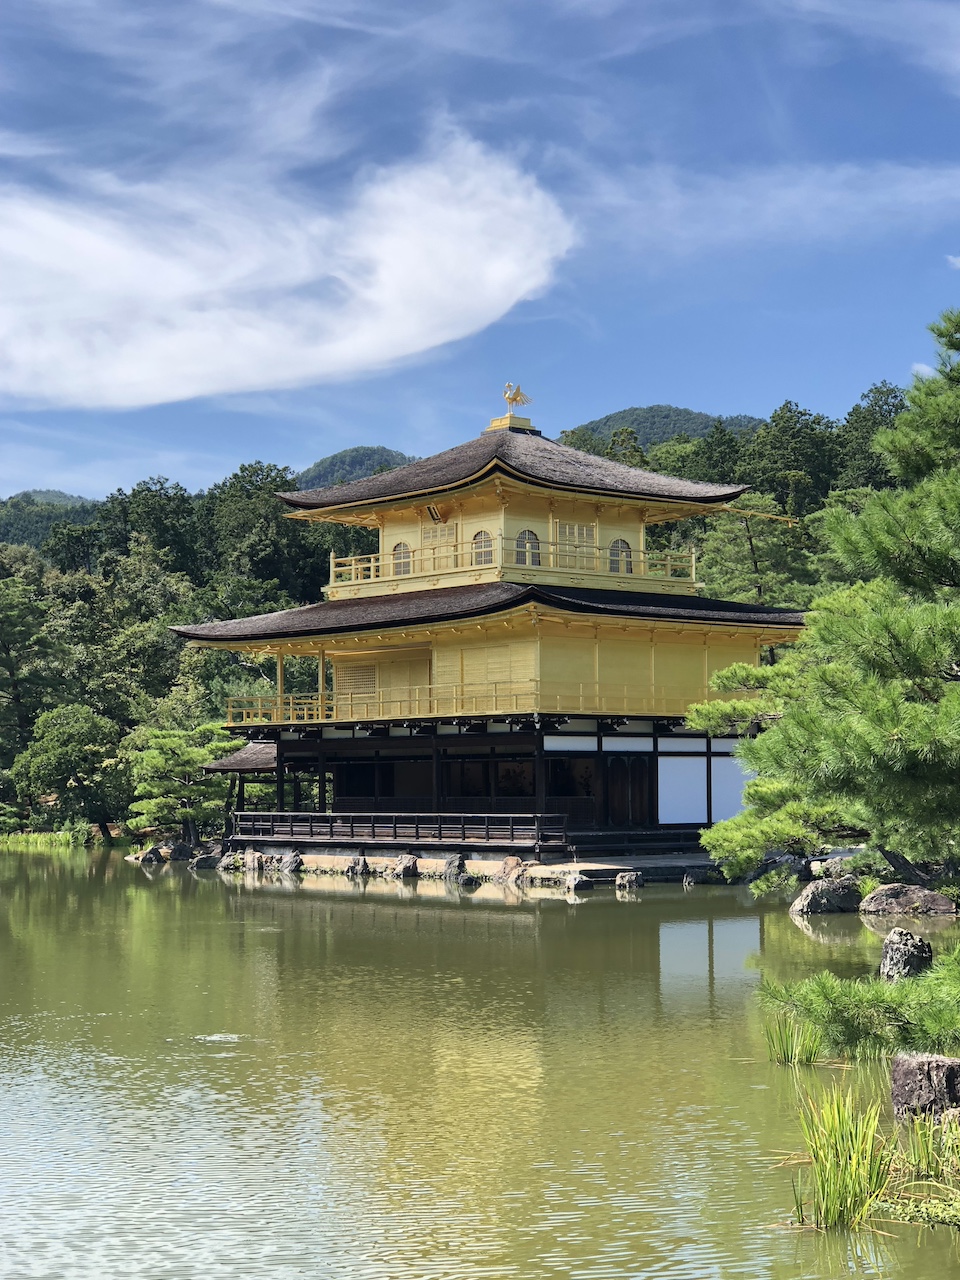 Kinkaku-ji (金閣寺, lit. 'Temple of the Golden Pavilion'), officially named Rokuon-ji (鹿苑寺, lit. 'Deer Garden Temple'), is a Zen Buddhist temple in Kyoto, Japan.